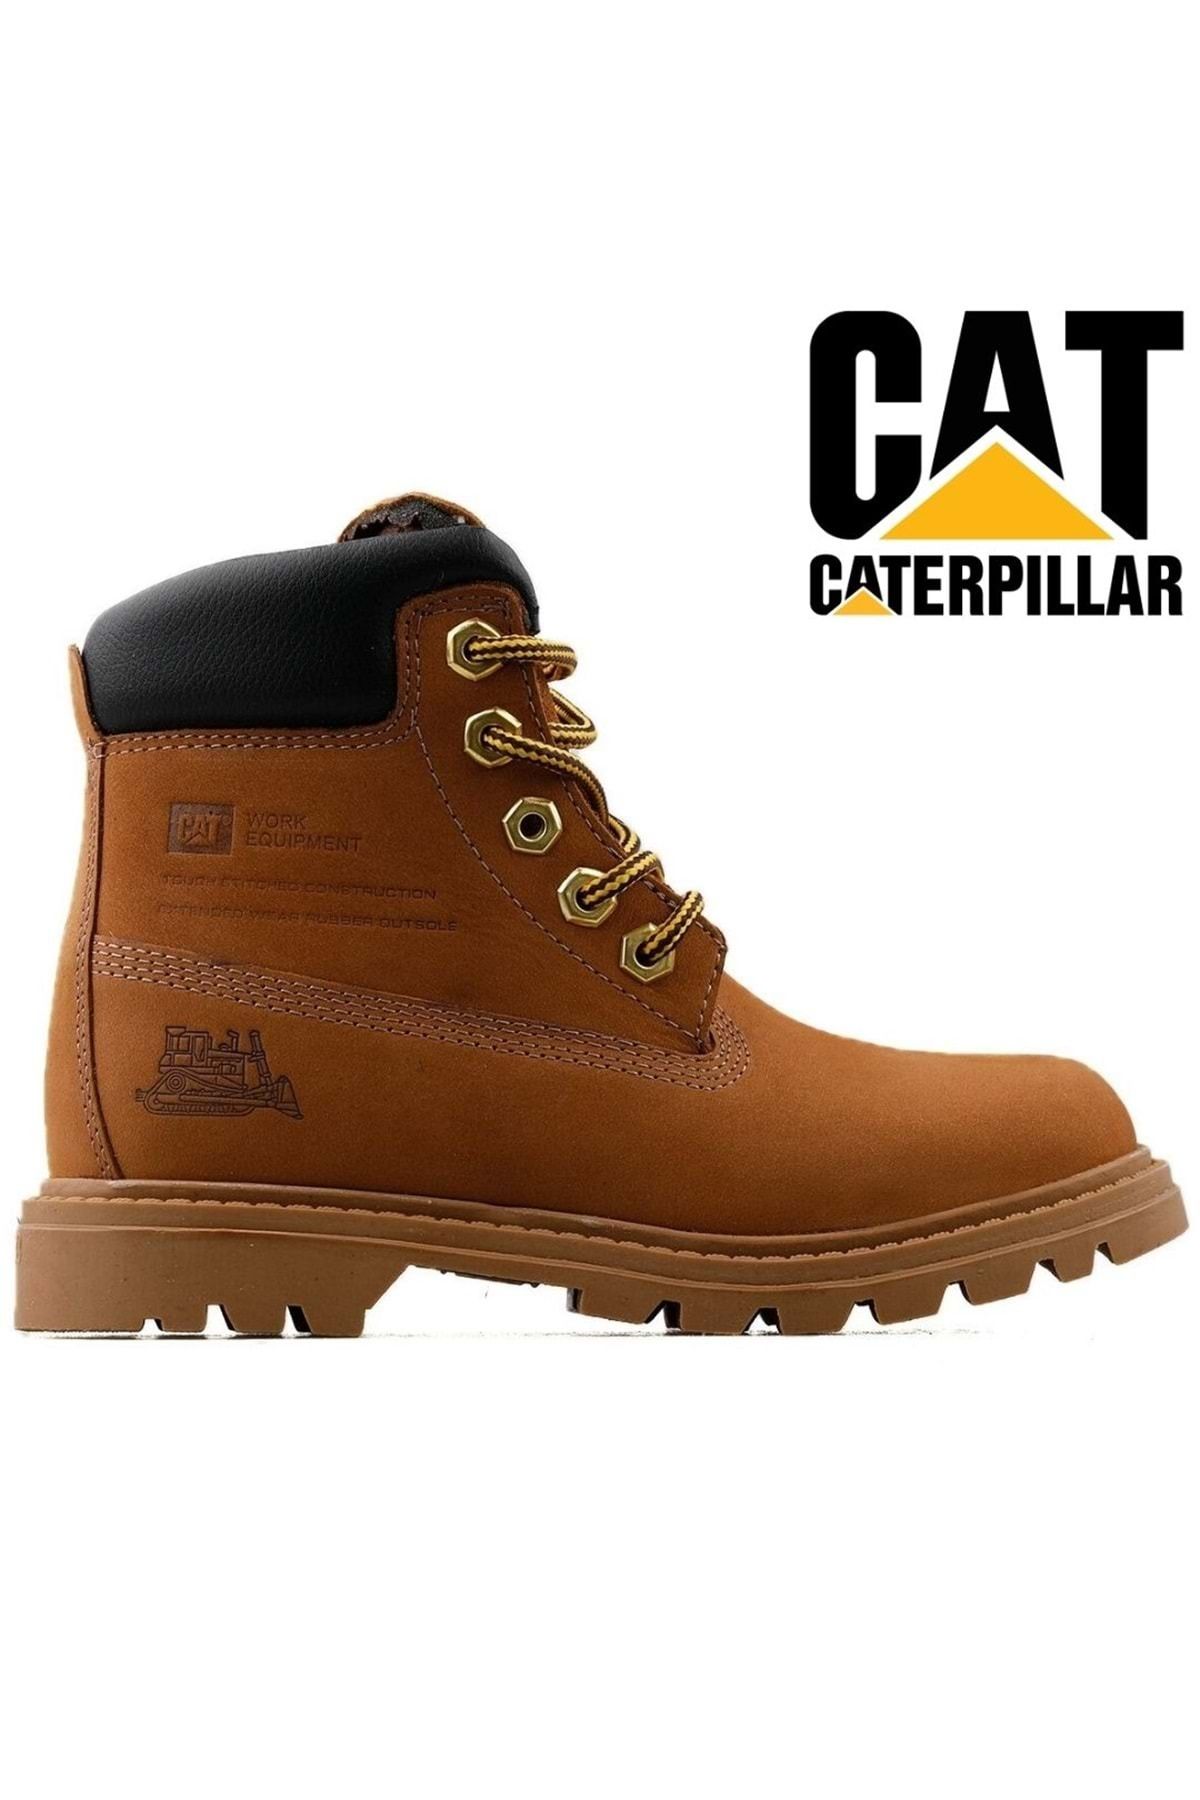 Caterpillar 015f101087 Bruiser 2.0 Kids Boots Cinnamon